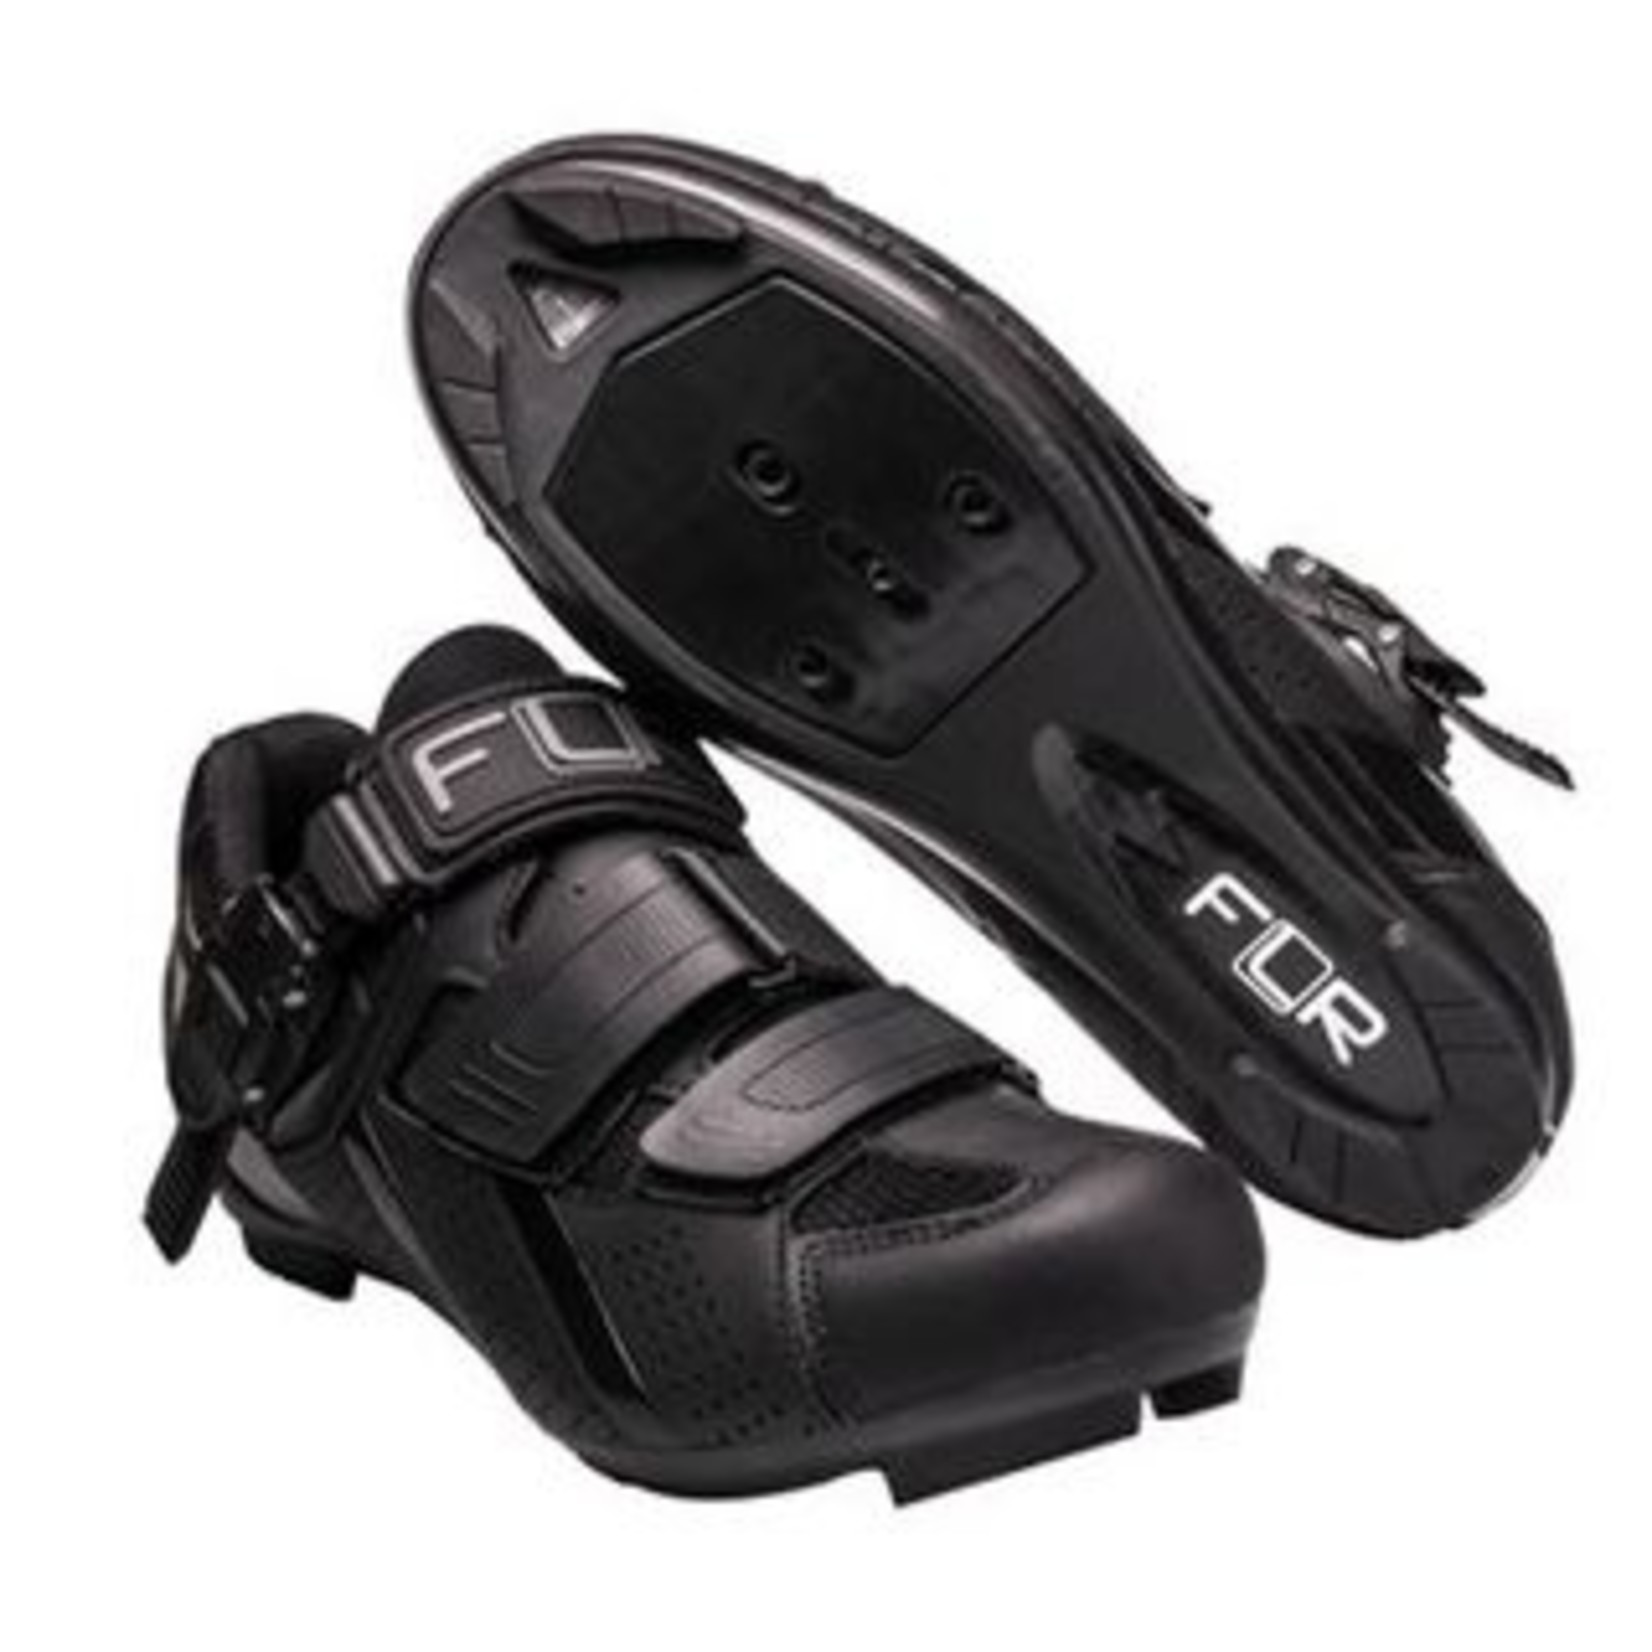 FLR FLR F-15-III Pro Road Shoes - R250 Outsole - Clip & Laces - Size 44 - Black